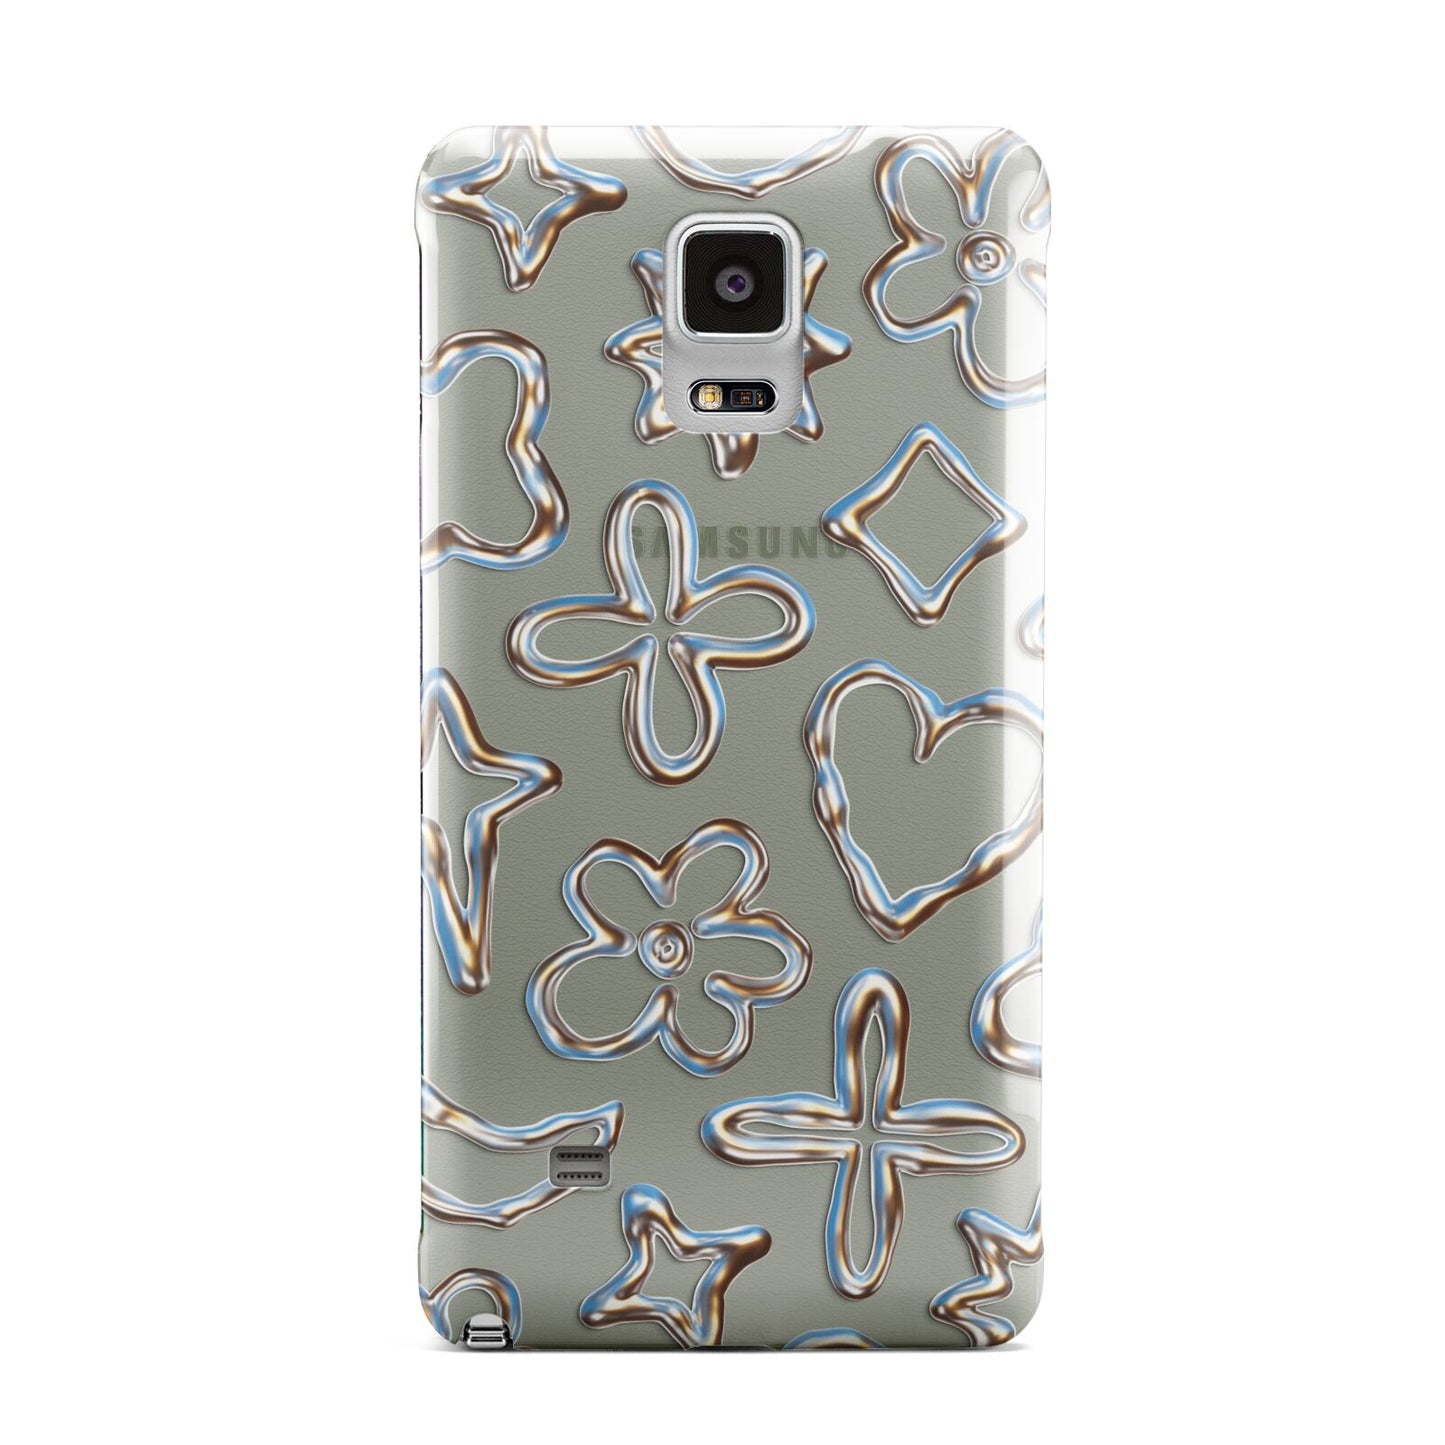 Liquid Chrome Doodles Samsung Galaxy Note 4 Case